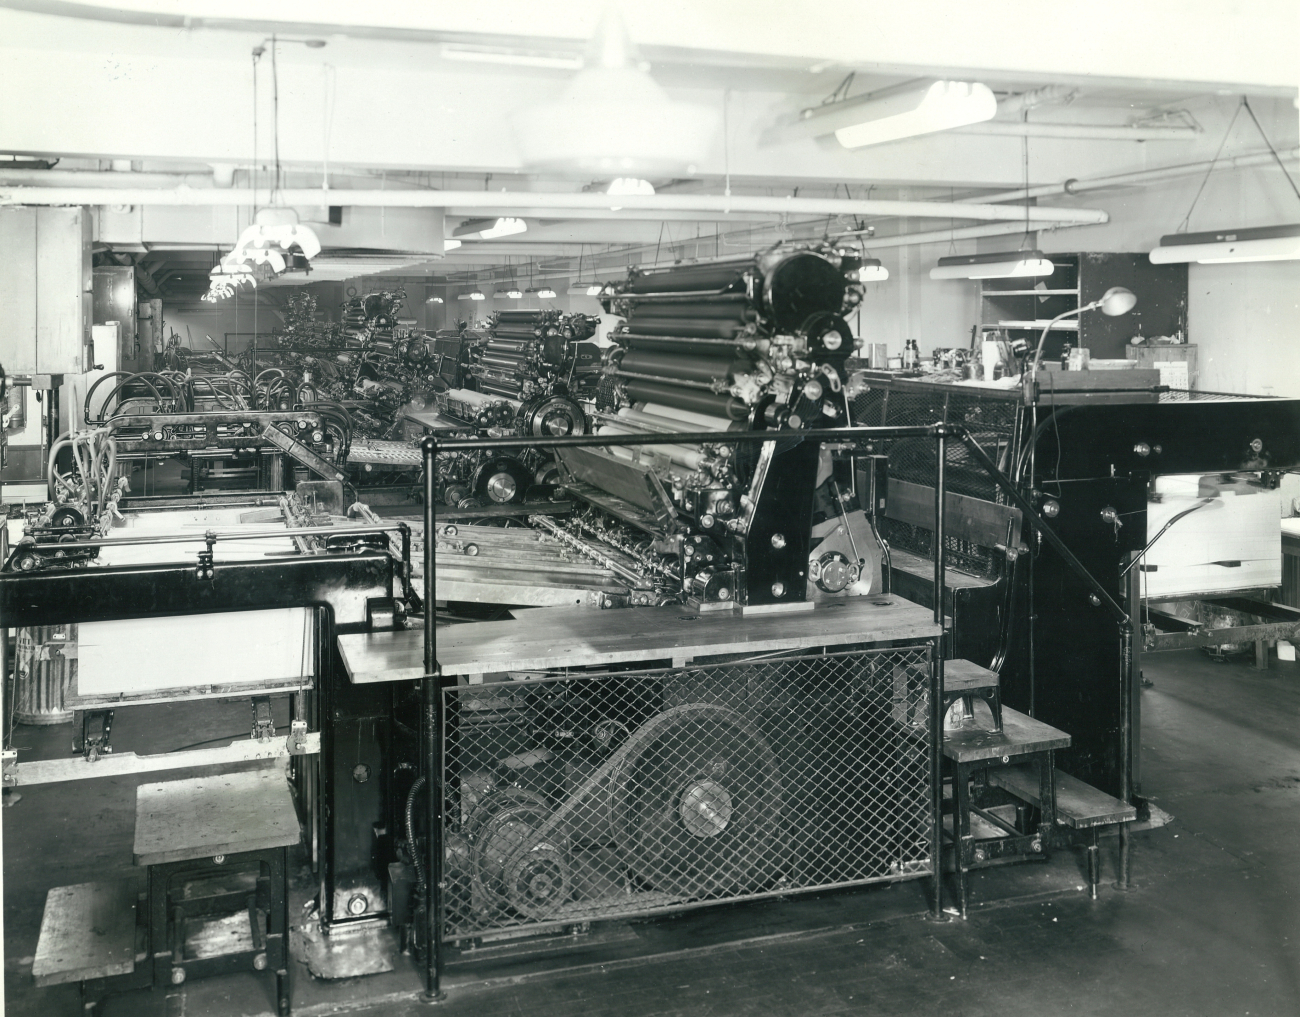 The press room - a mechanical engineer's dream